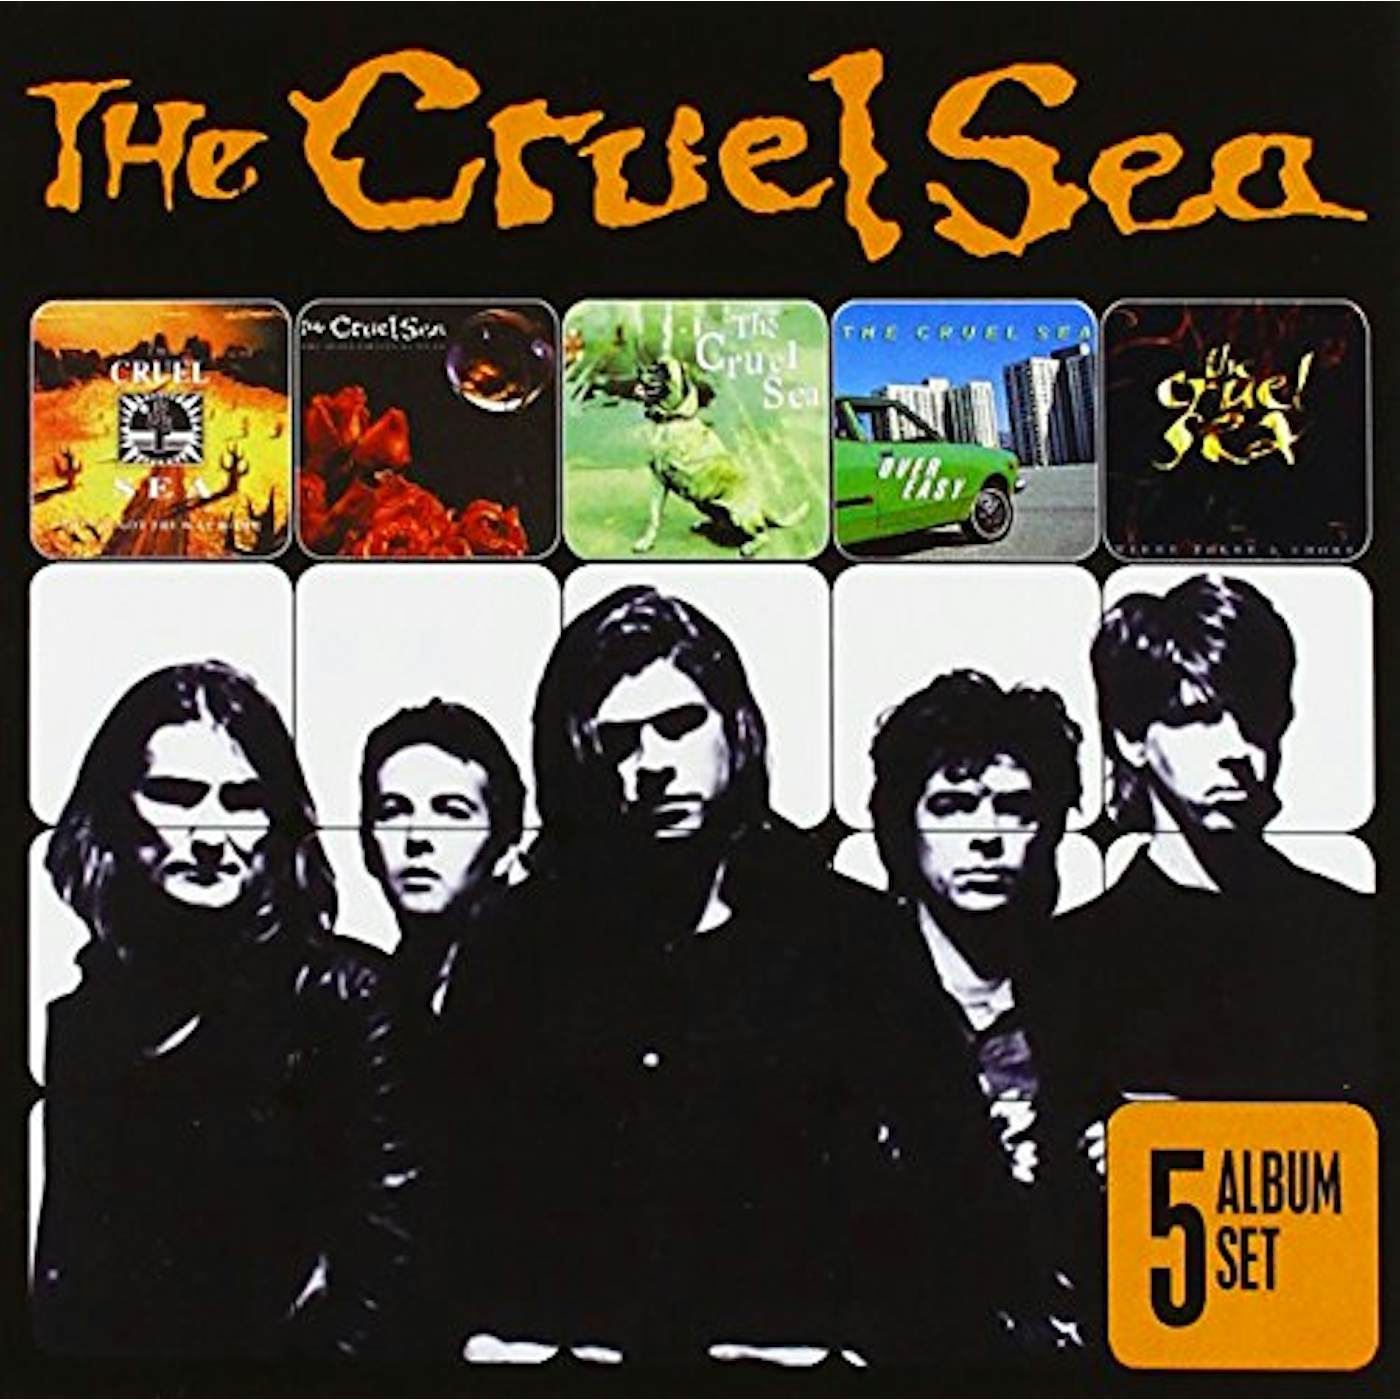 The Cruel Sea 5 ALBUM SET CD